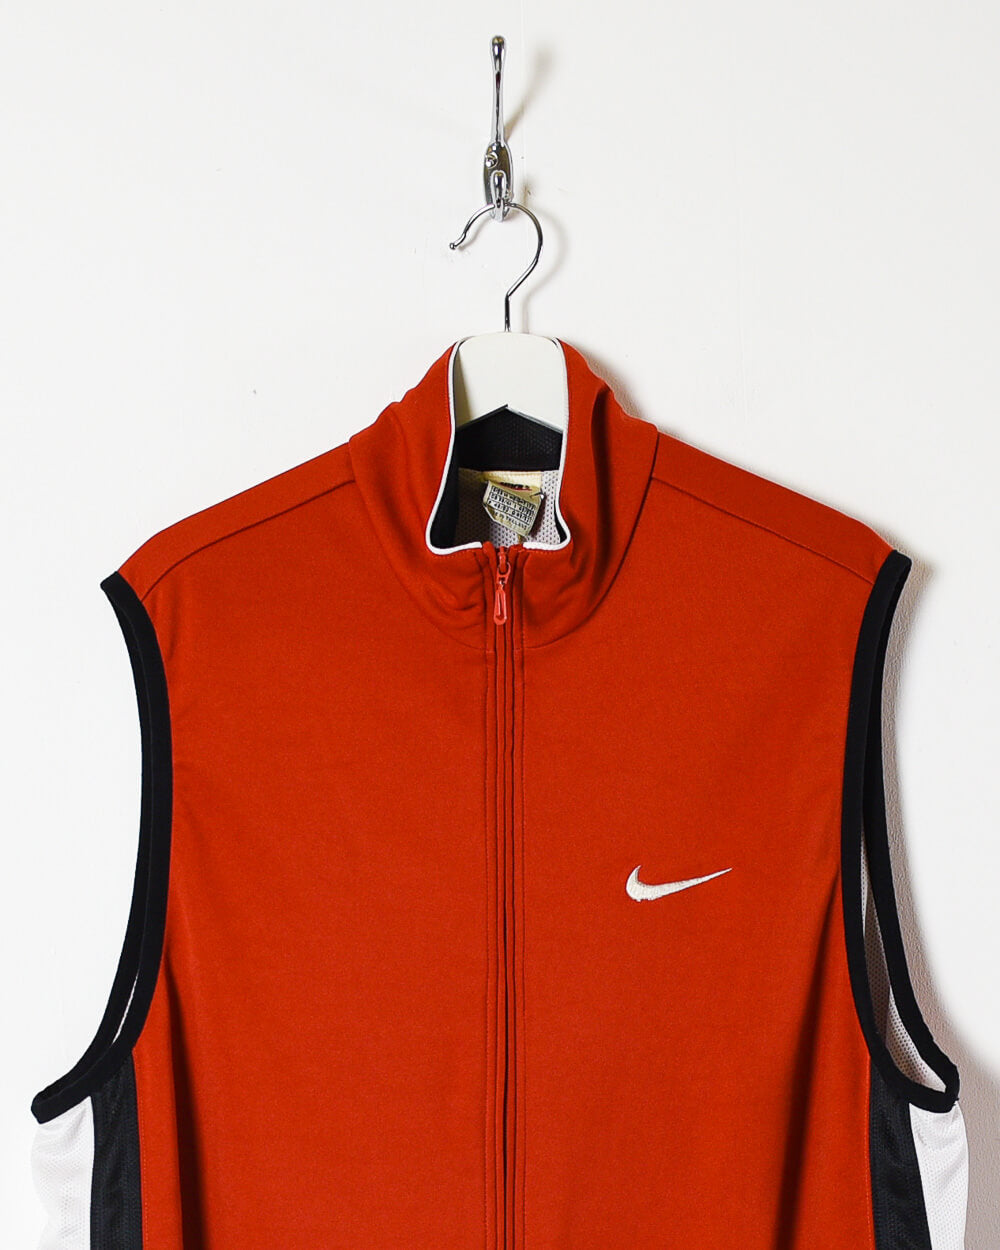 Red Nike Tracksuit Bodywarmer - Medium